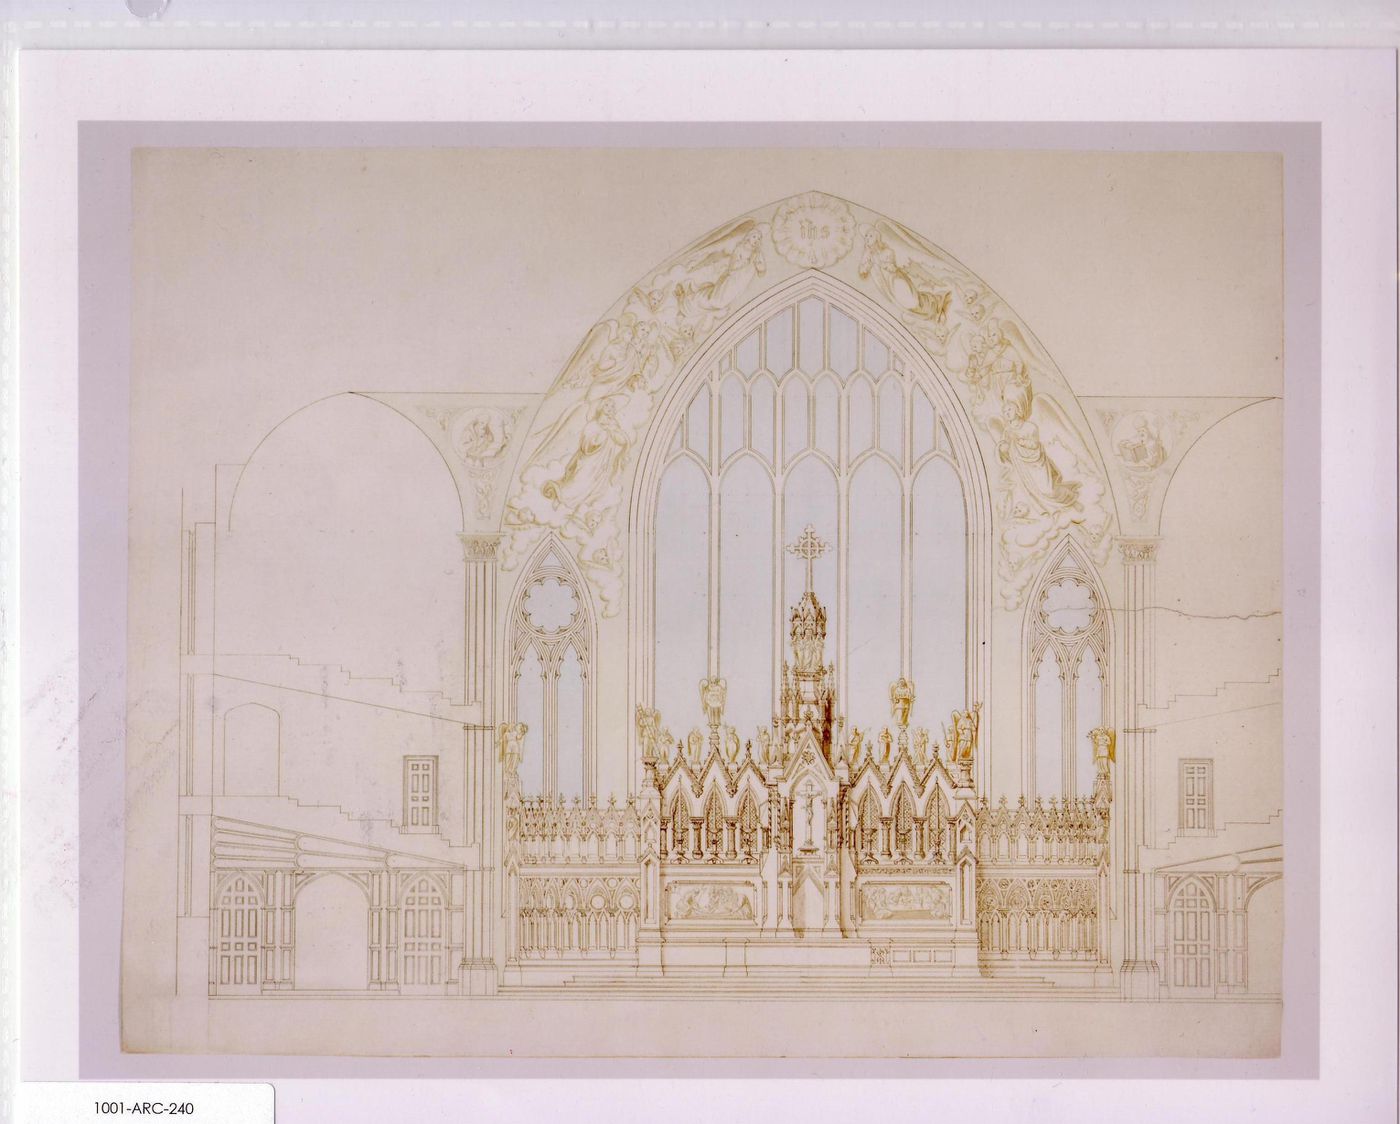 Sectional elevation for the choir for the interior design by Bourgeau et Leprohon for Notre-Dame de Montréal